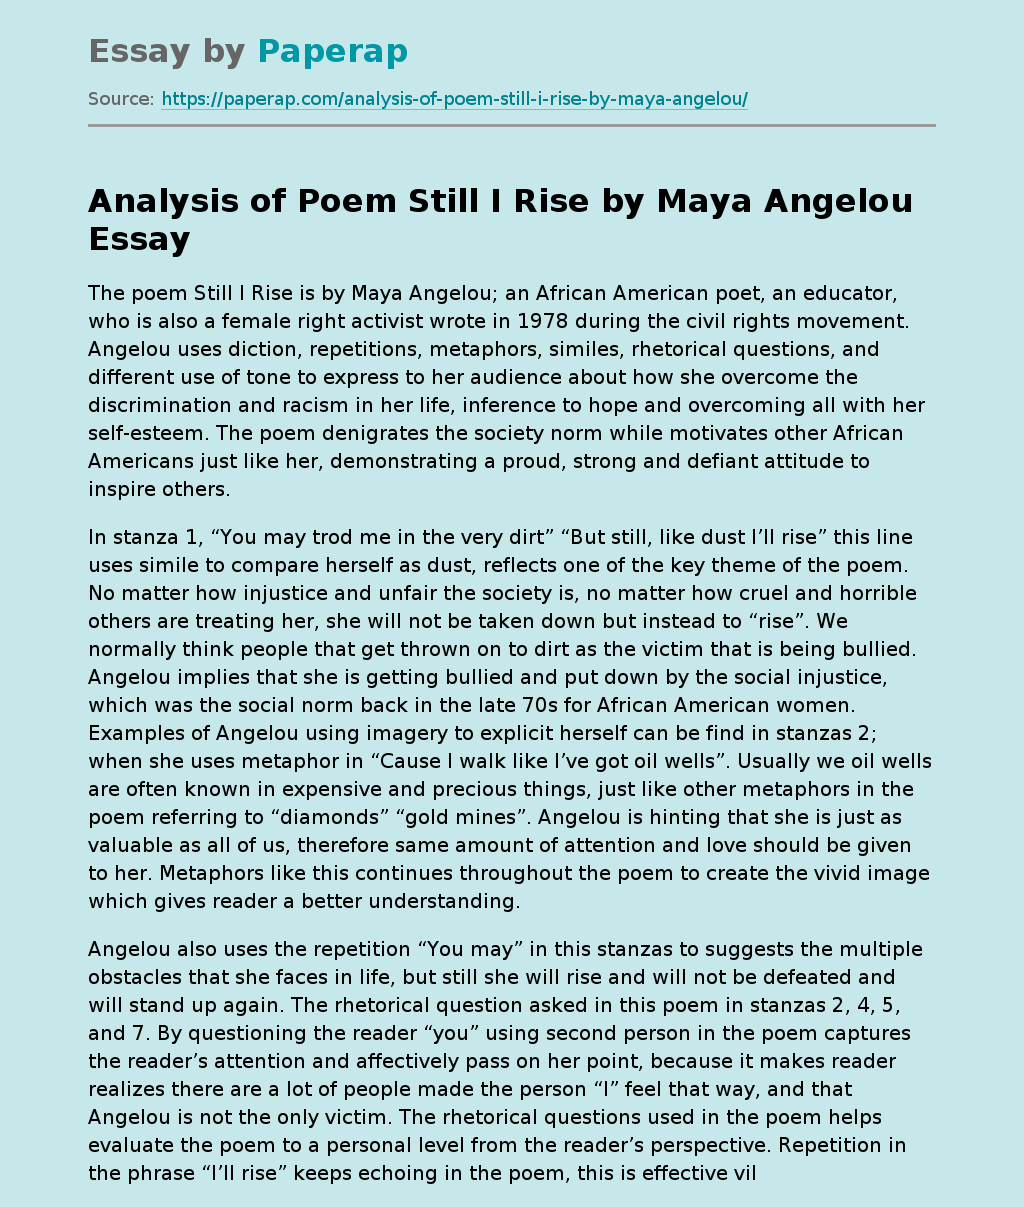 Analysis of Poem Still I Rise by Maya Angelou